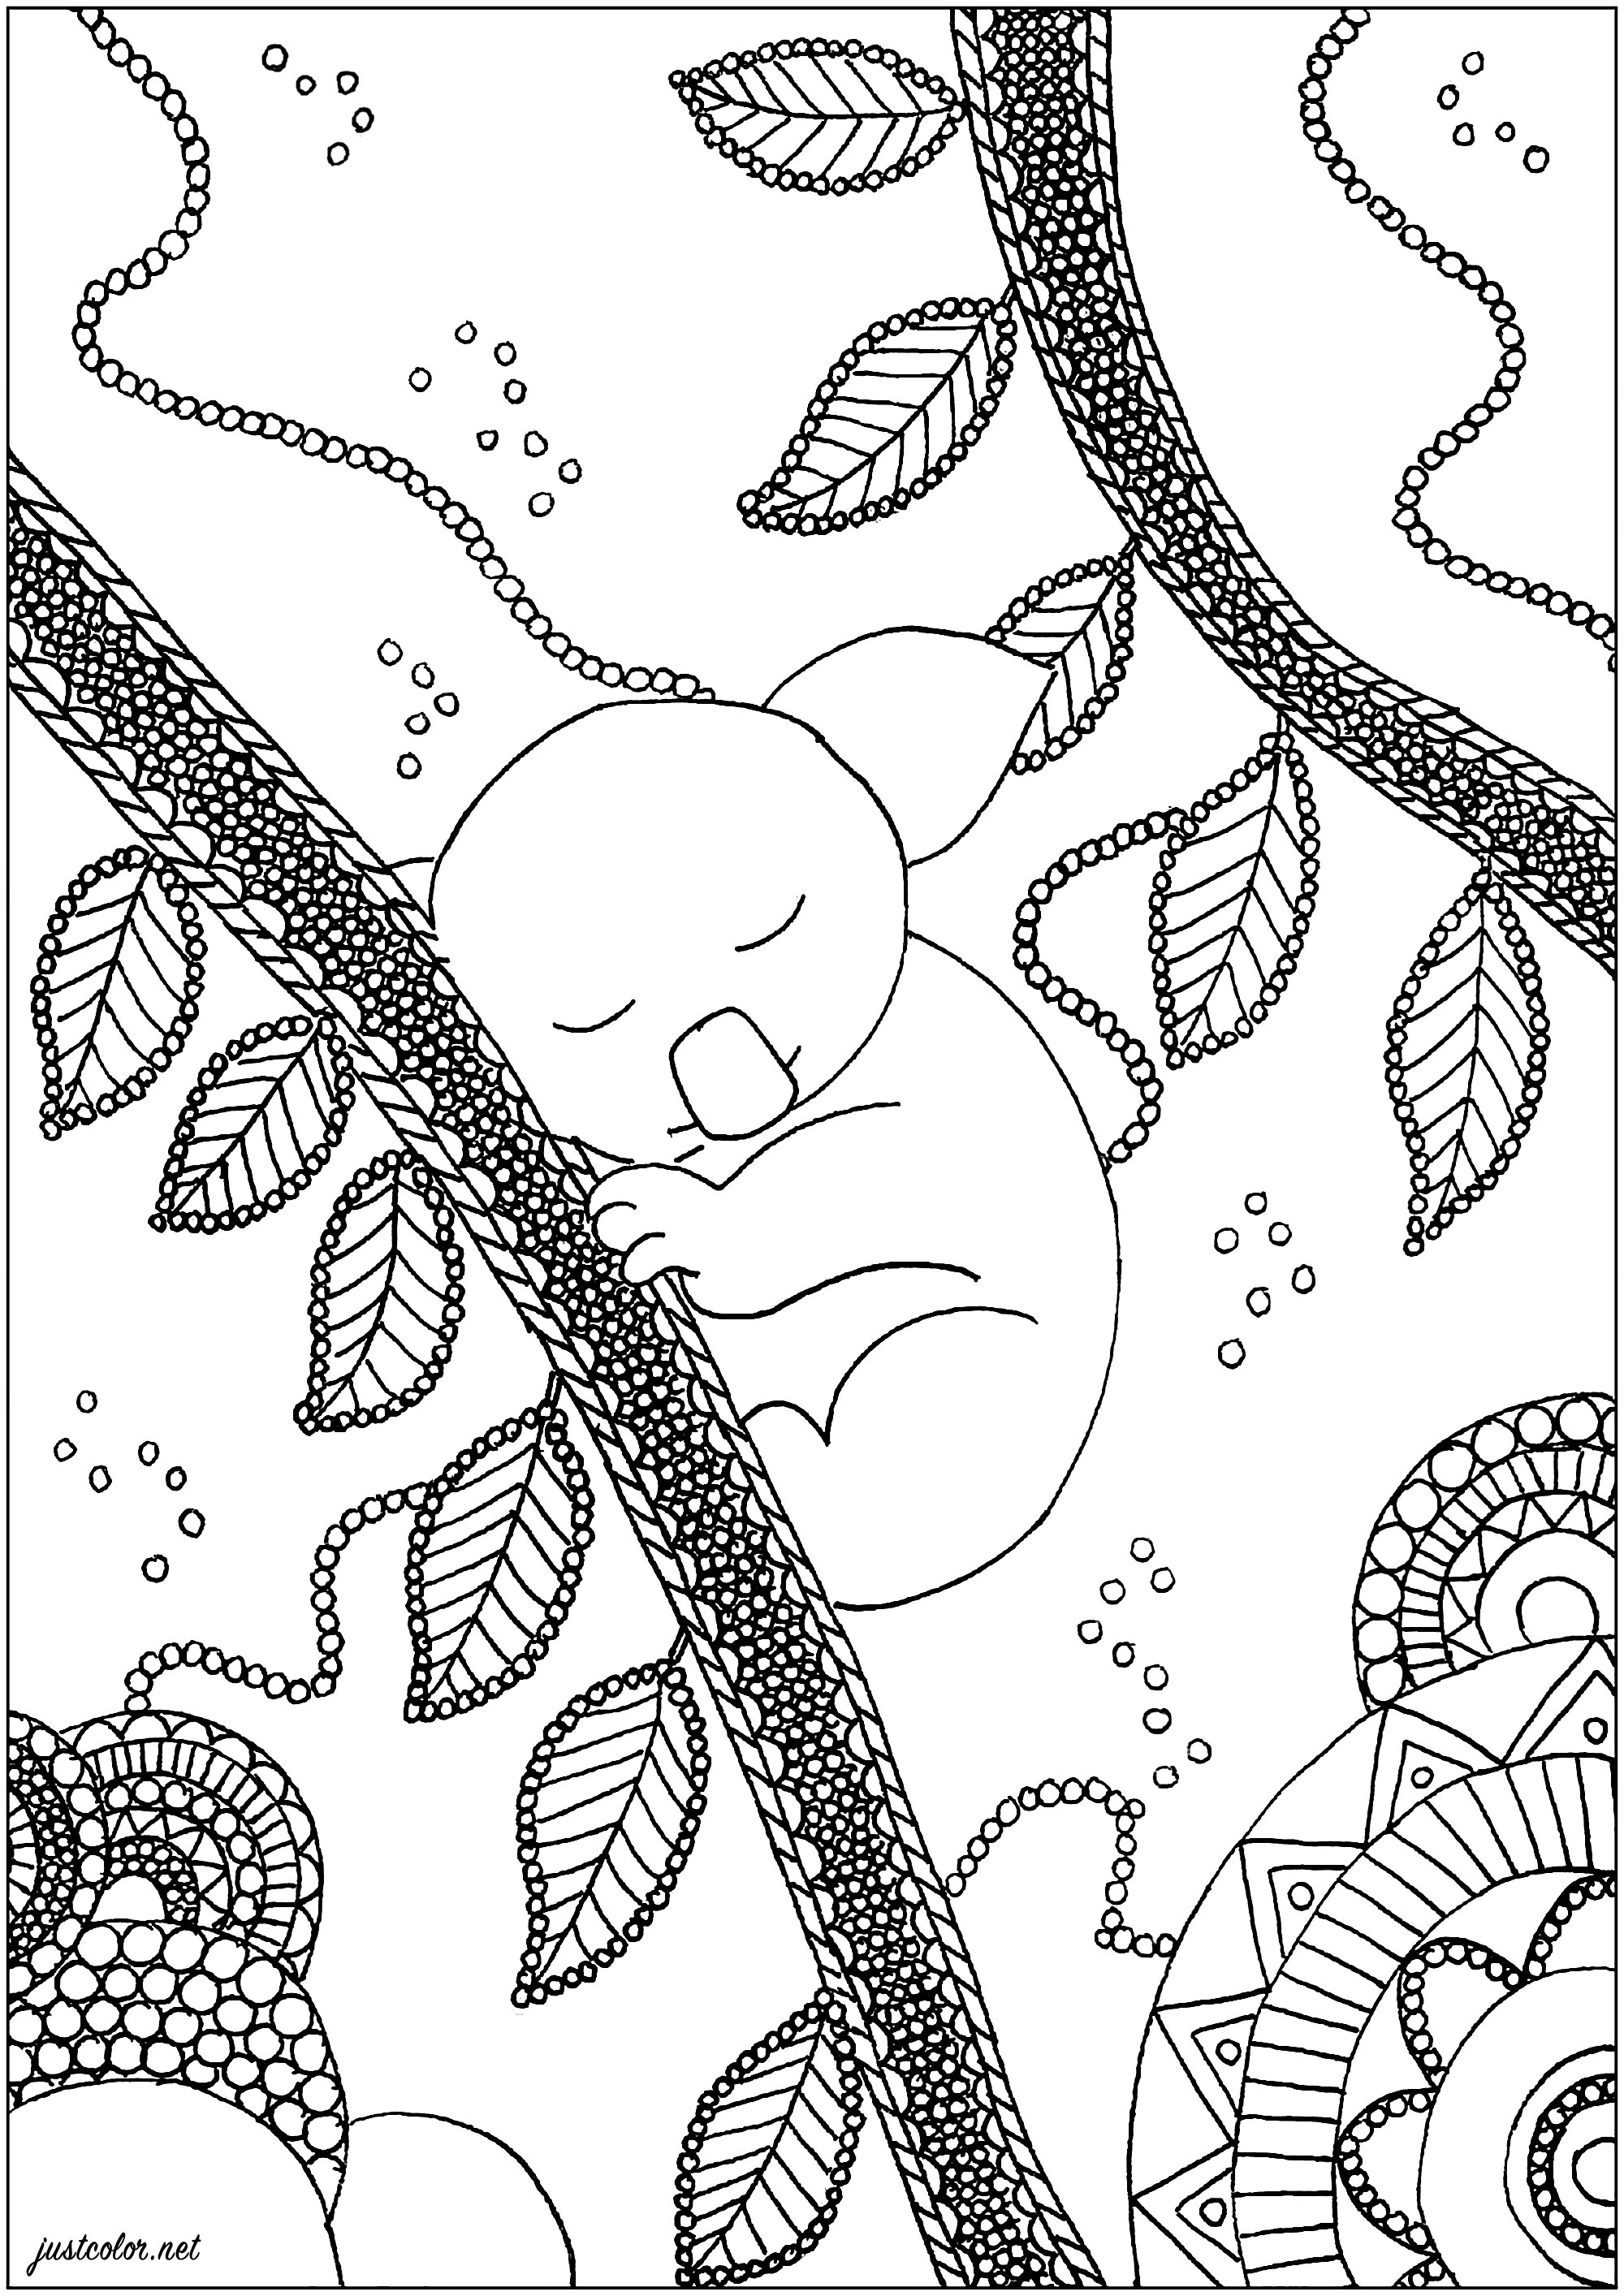 Página para colorir : Ursos Koala - 2